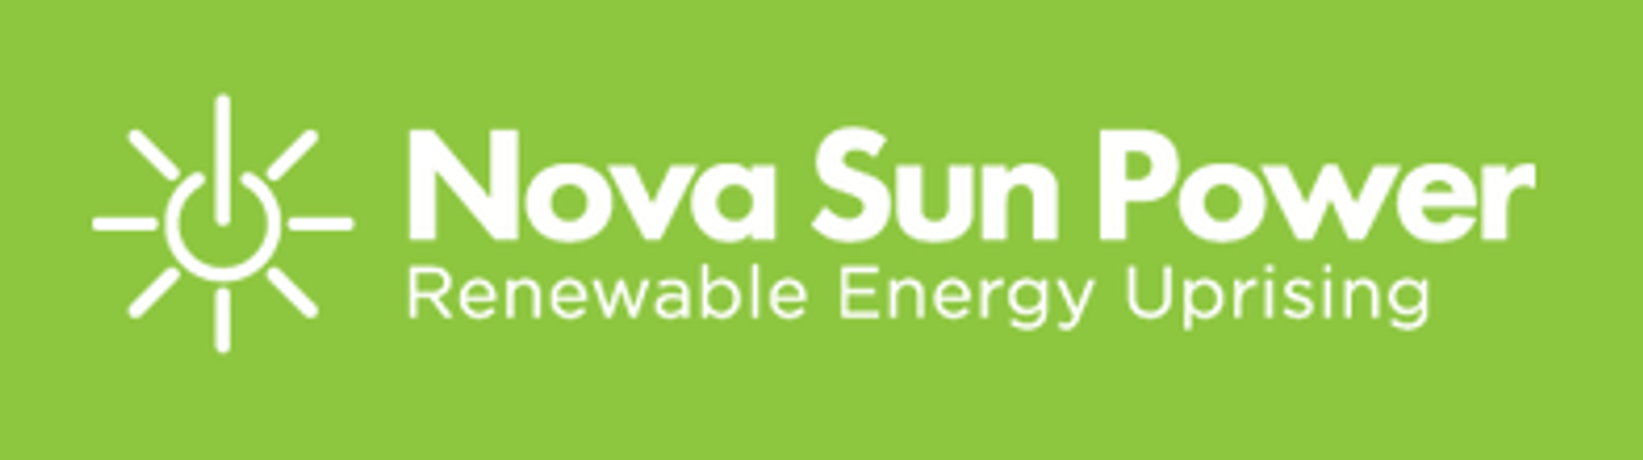 Nova - Solar Hot Air System